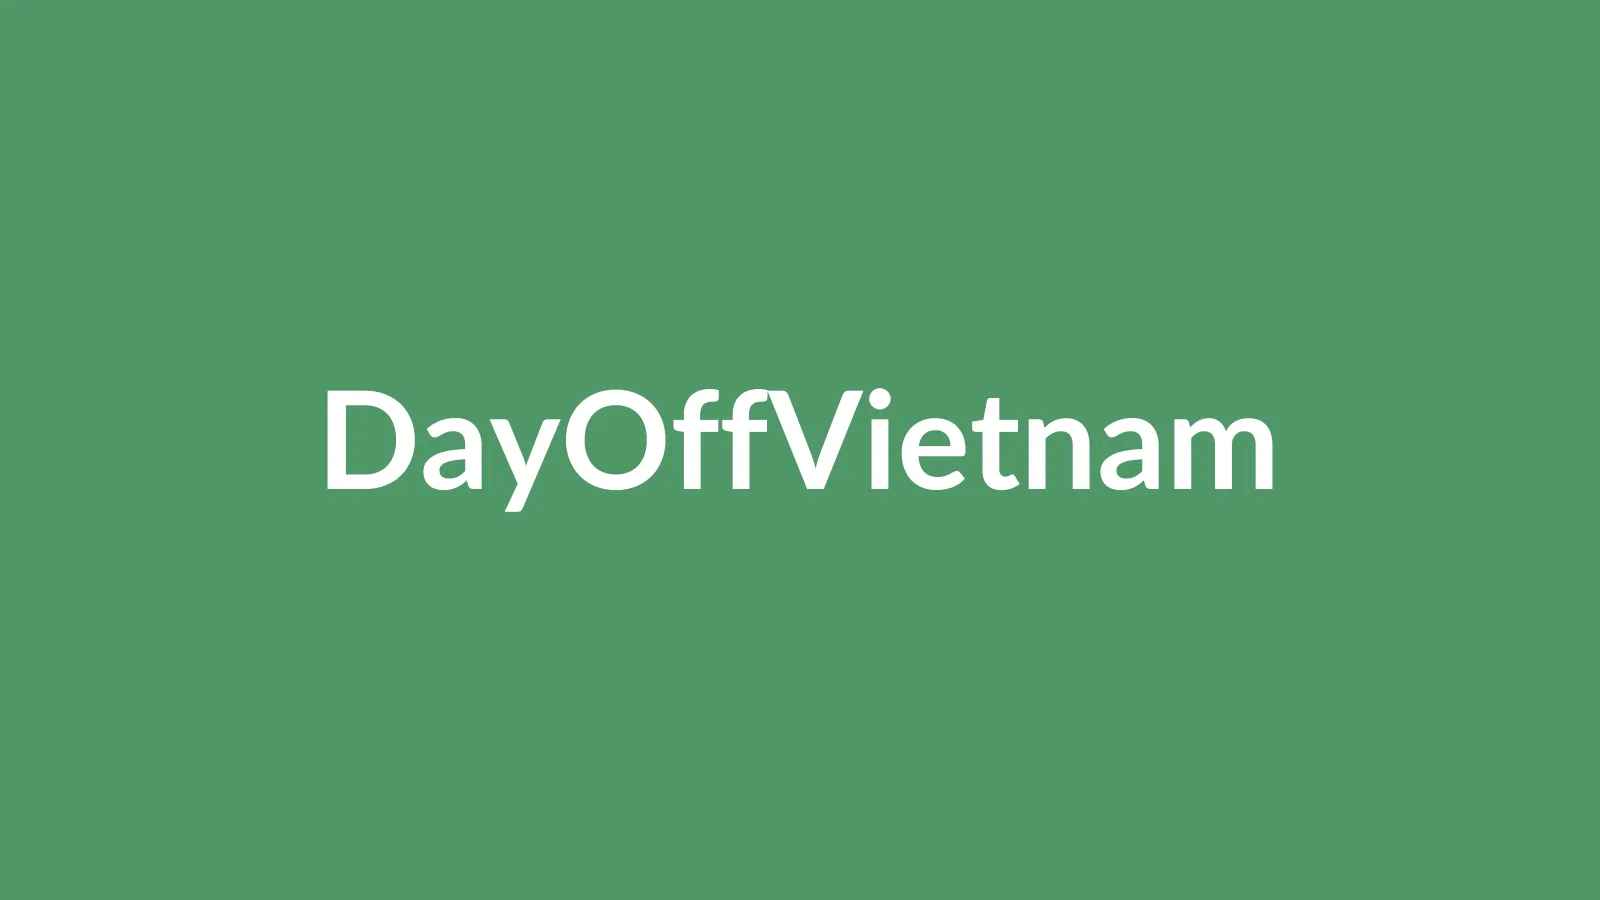 DayOffVietnam Webapp screenshot - timeline